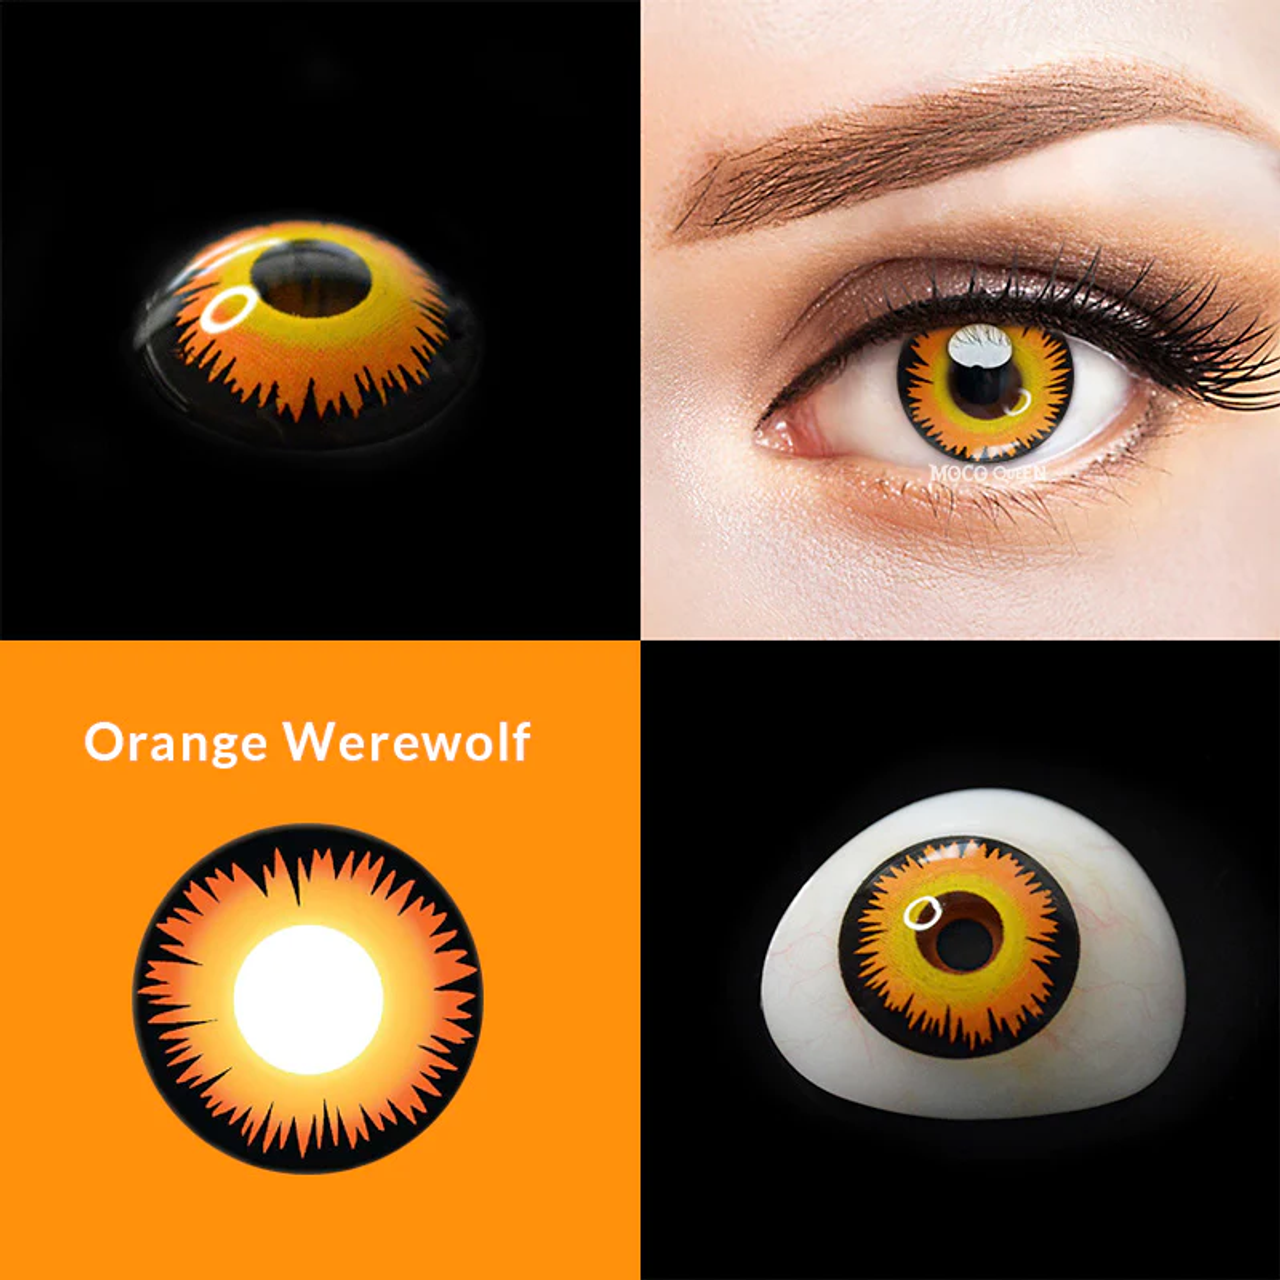 Orange werewolf eyes Crazy Contact lenses Halloween — iCrazyAngel